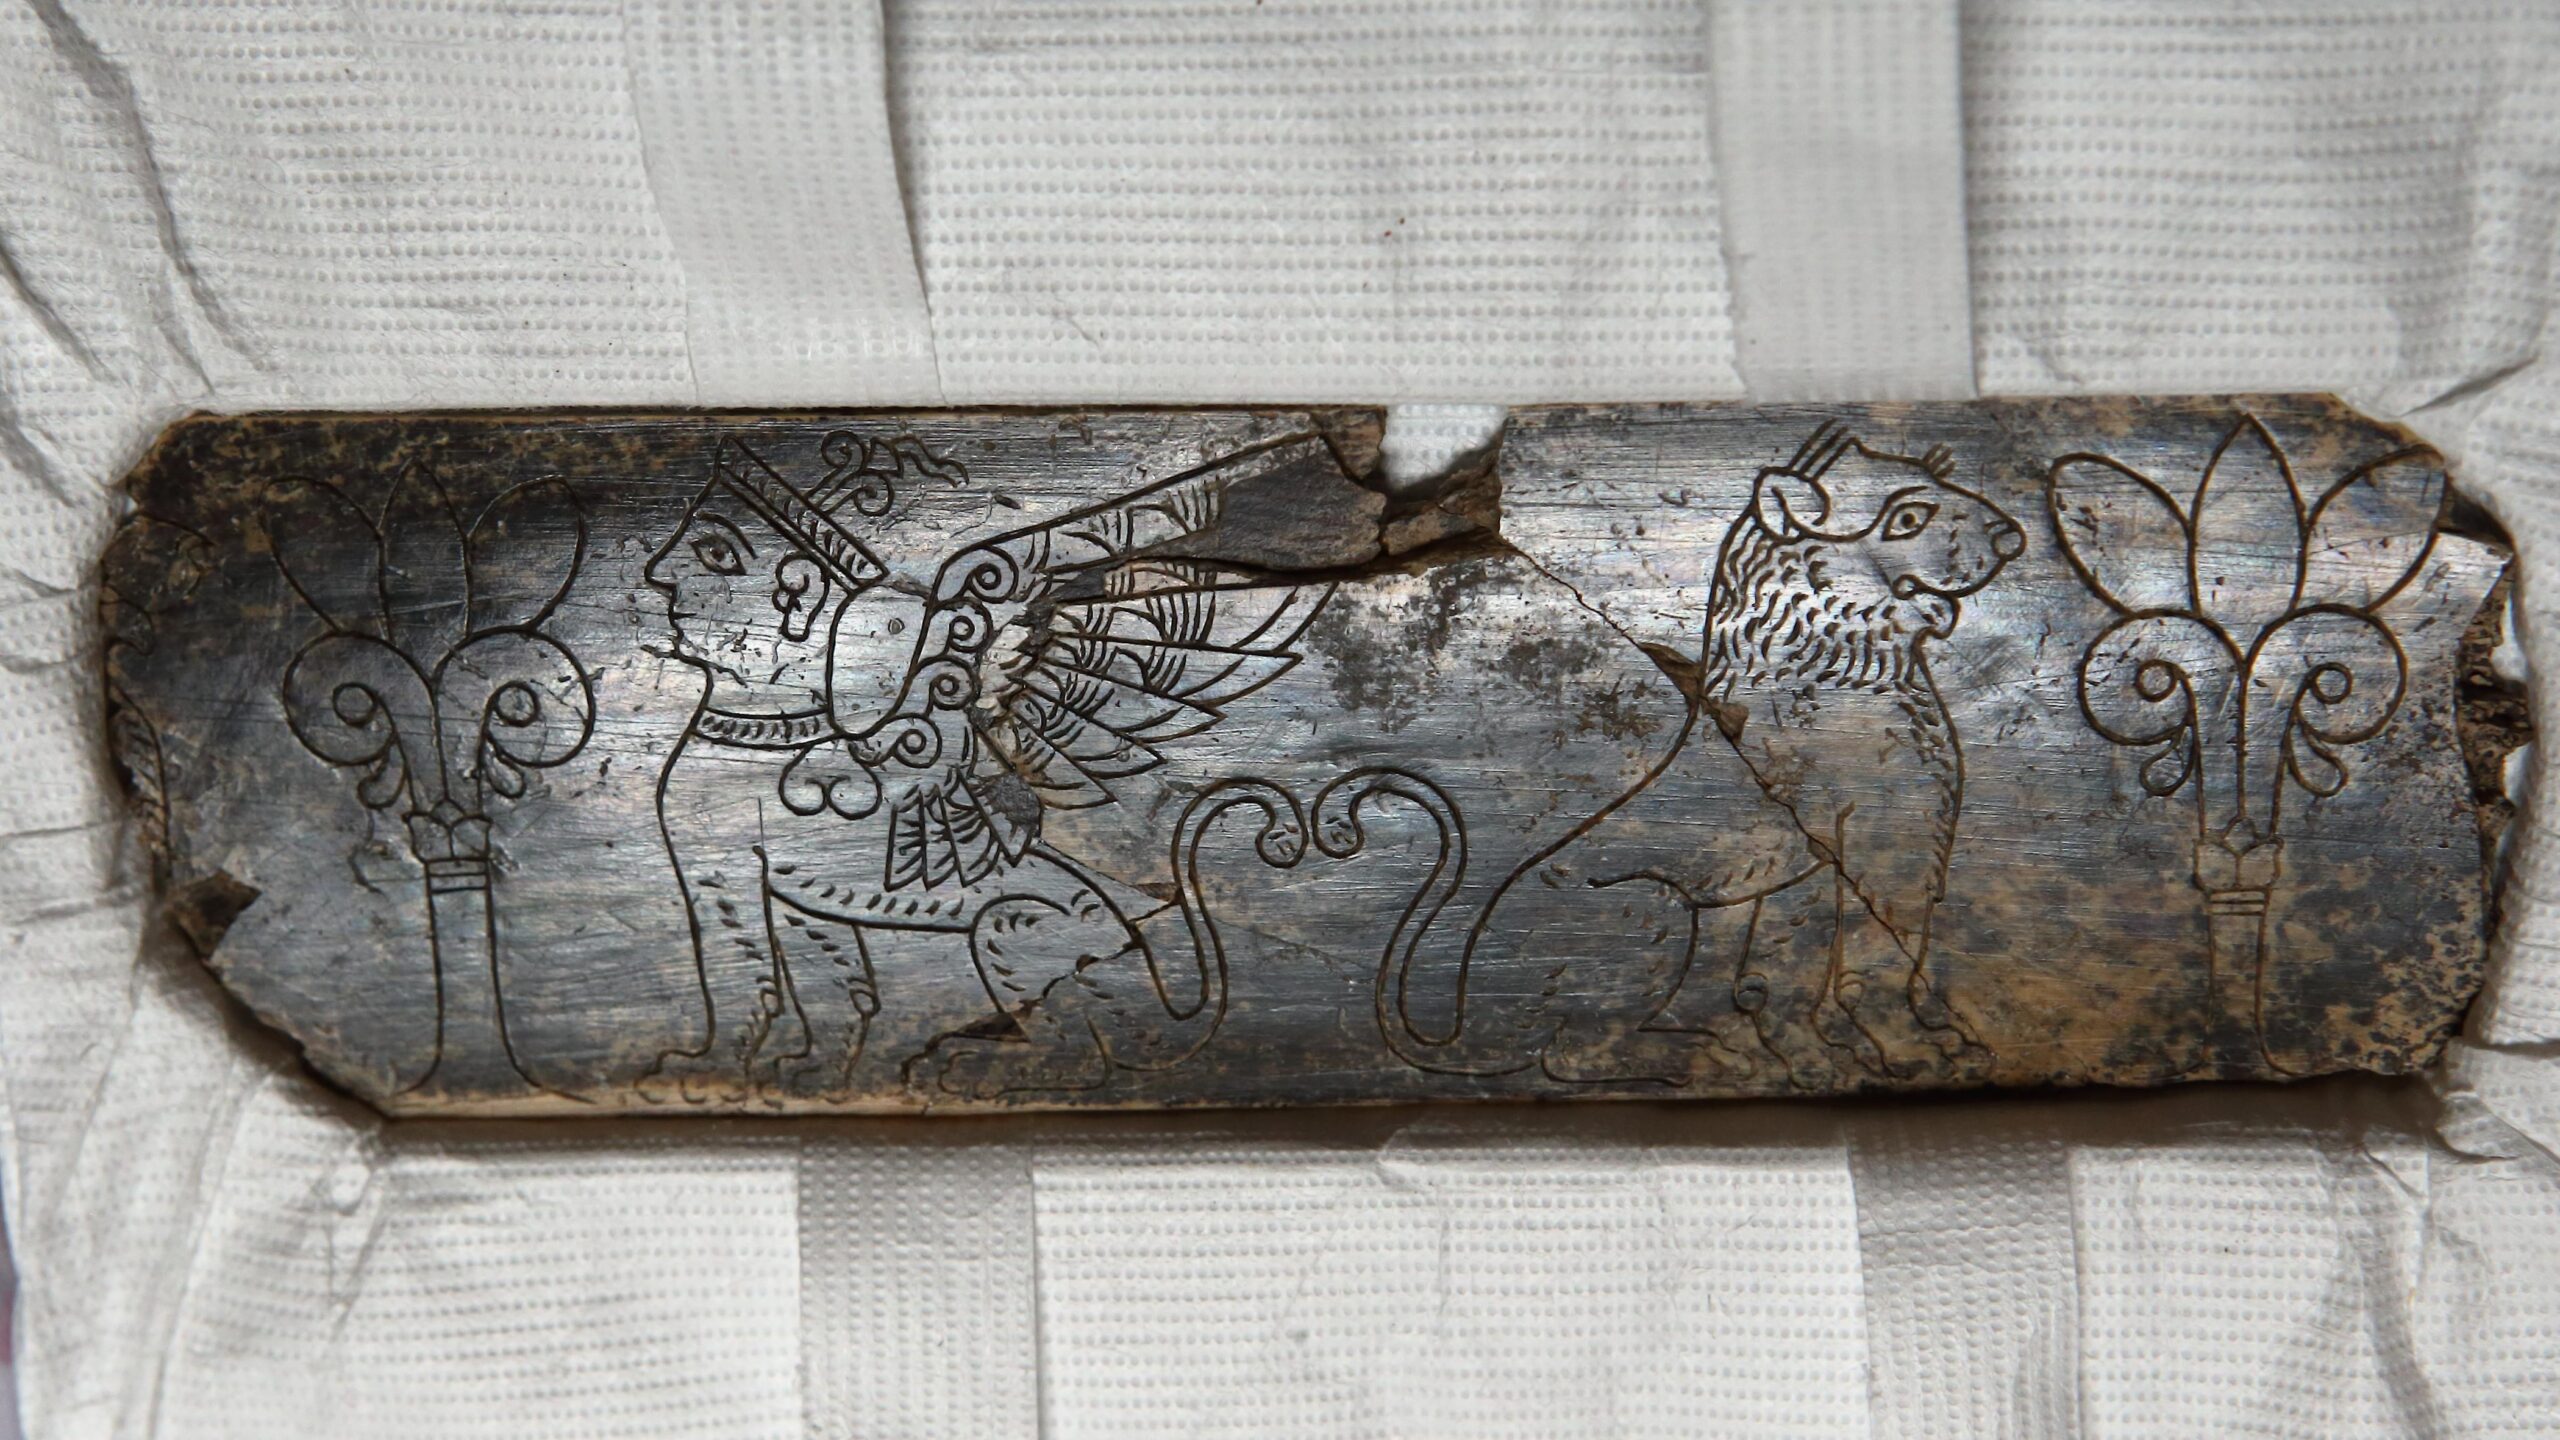 Iron Age engraved ivory found at Hattusa